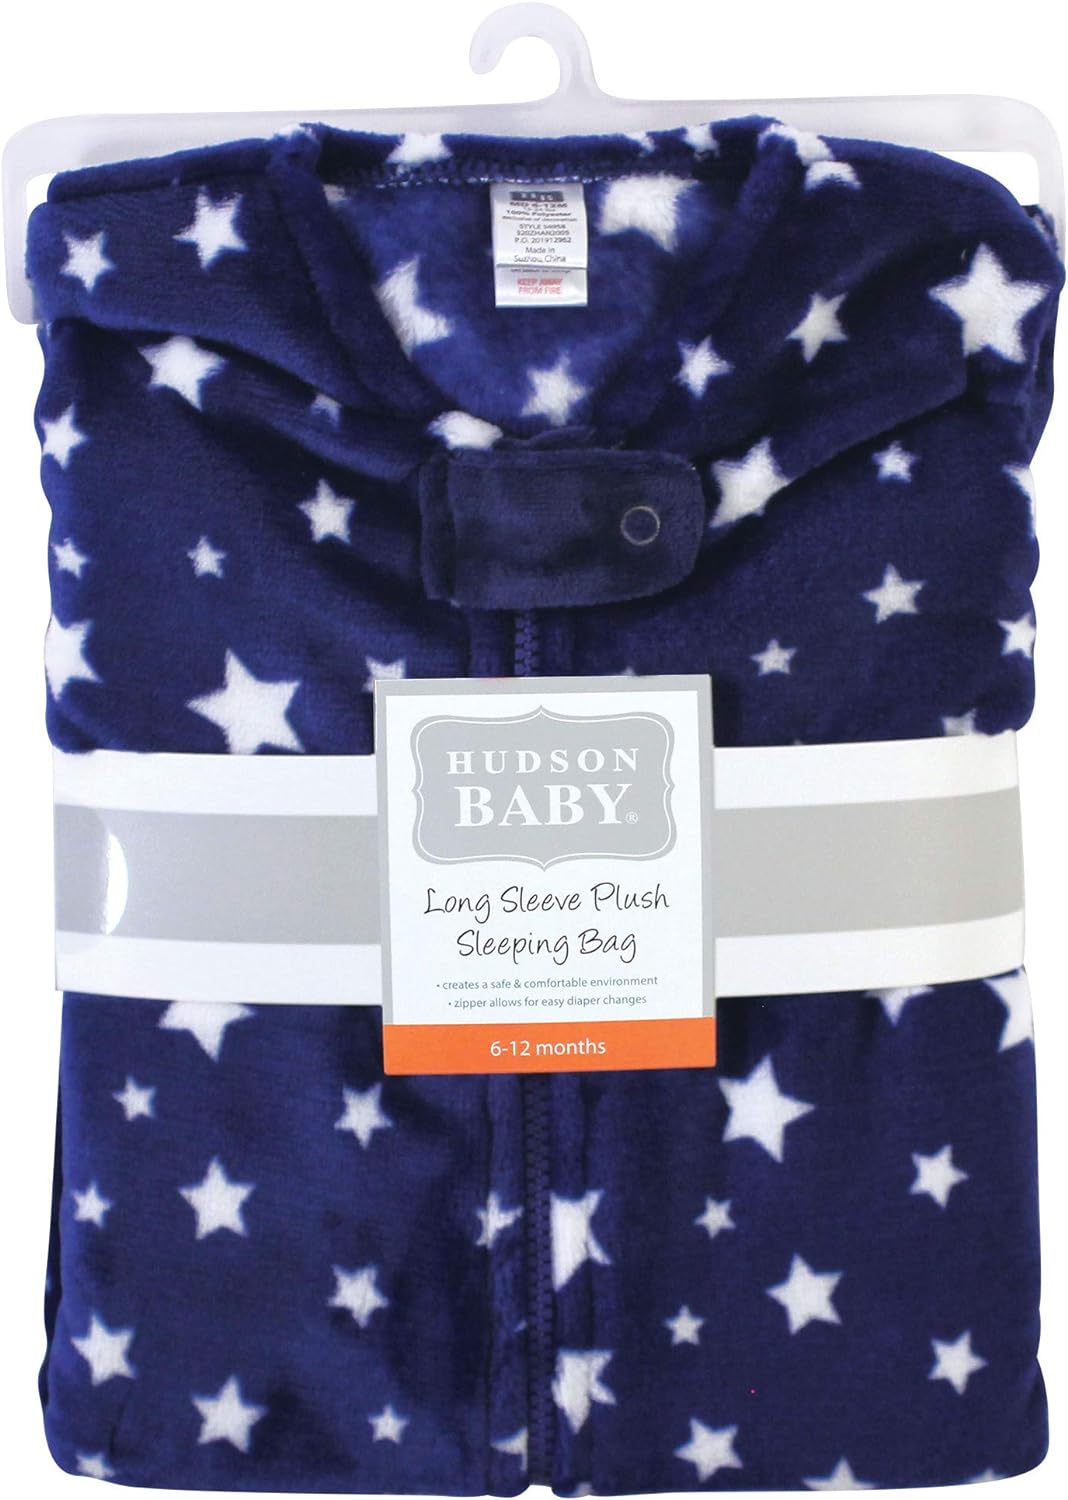 Hudson Baby Unisex BabyPlush Sleeping Bag, Sack, Blanket